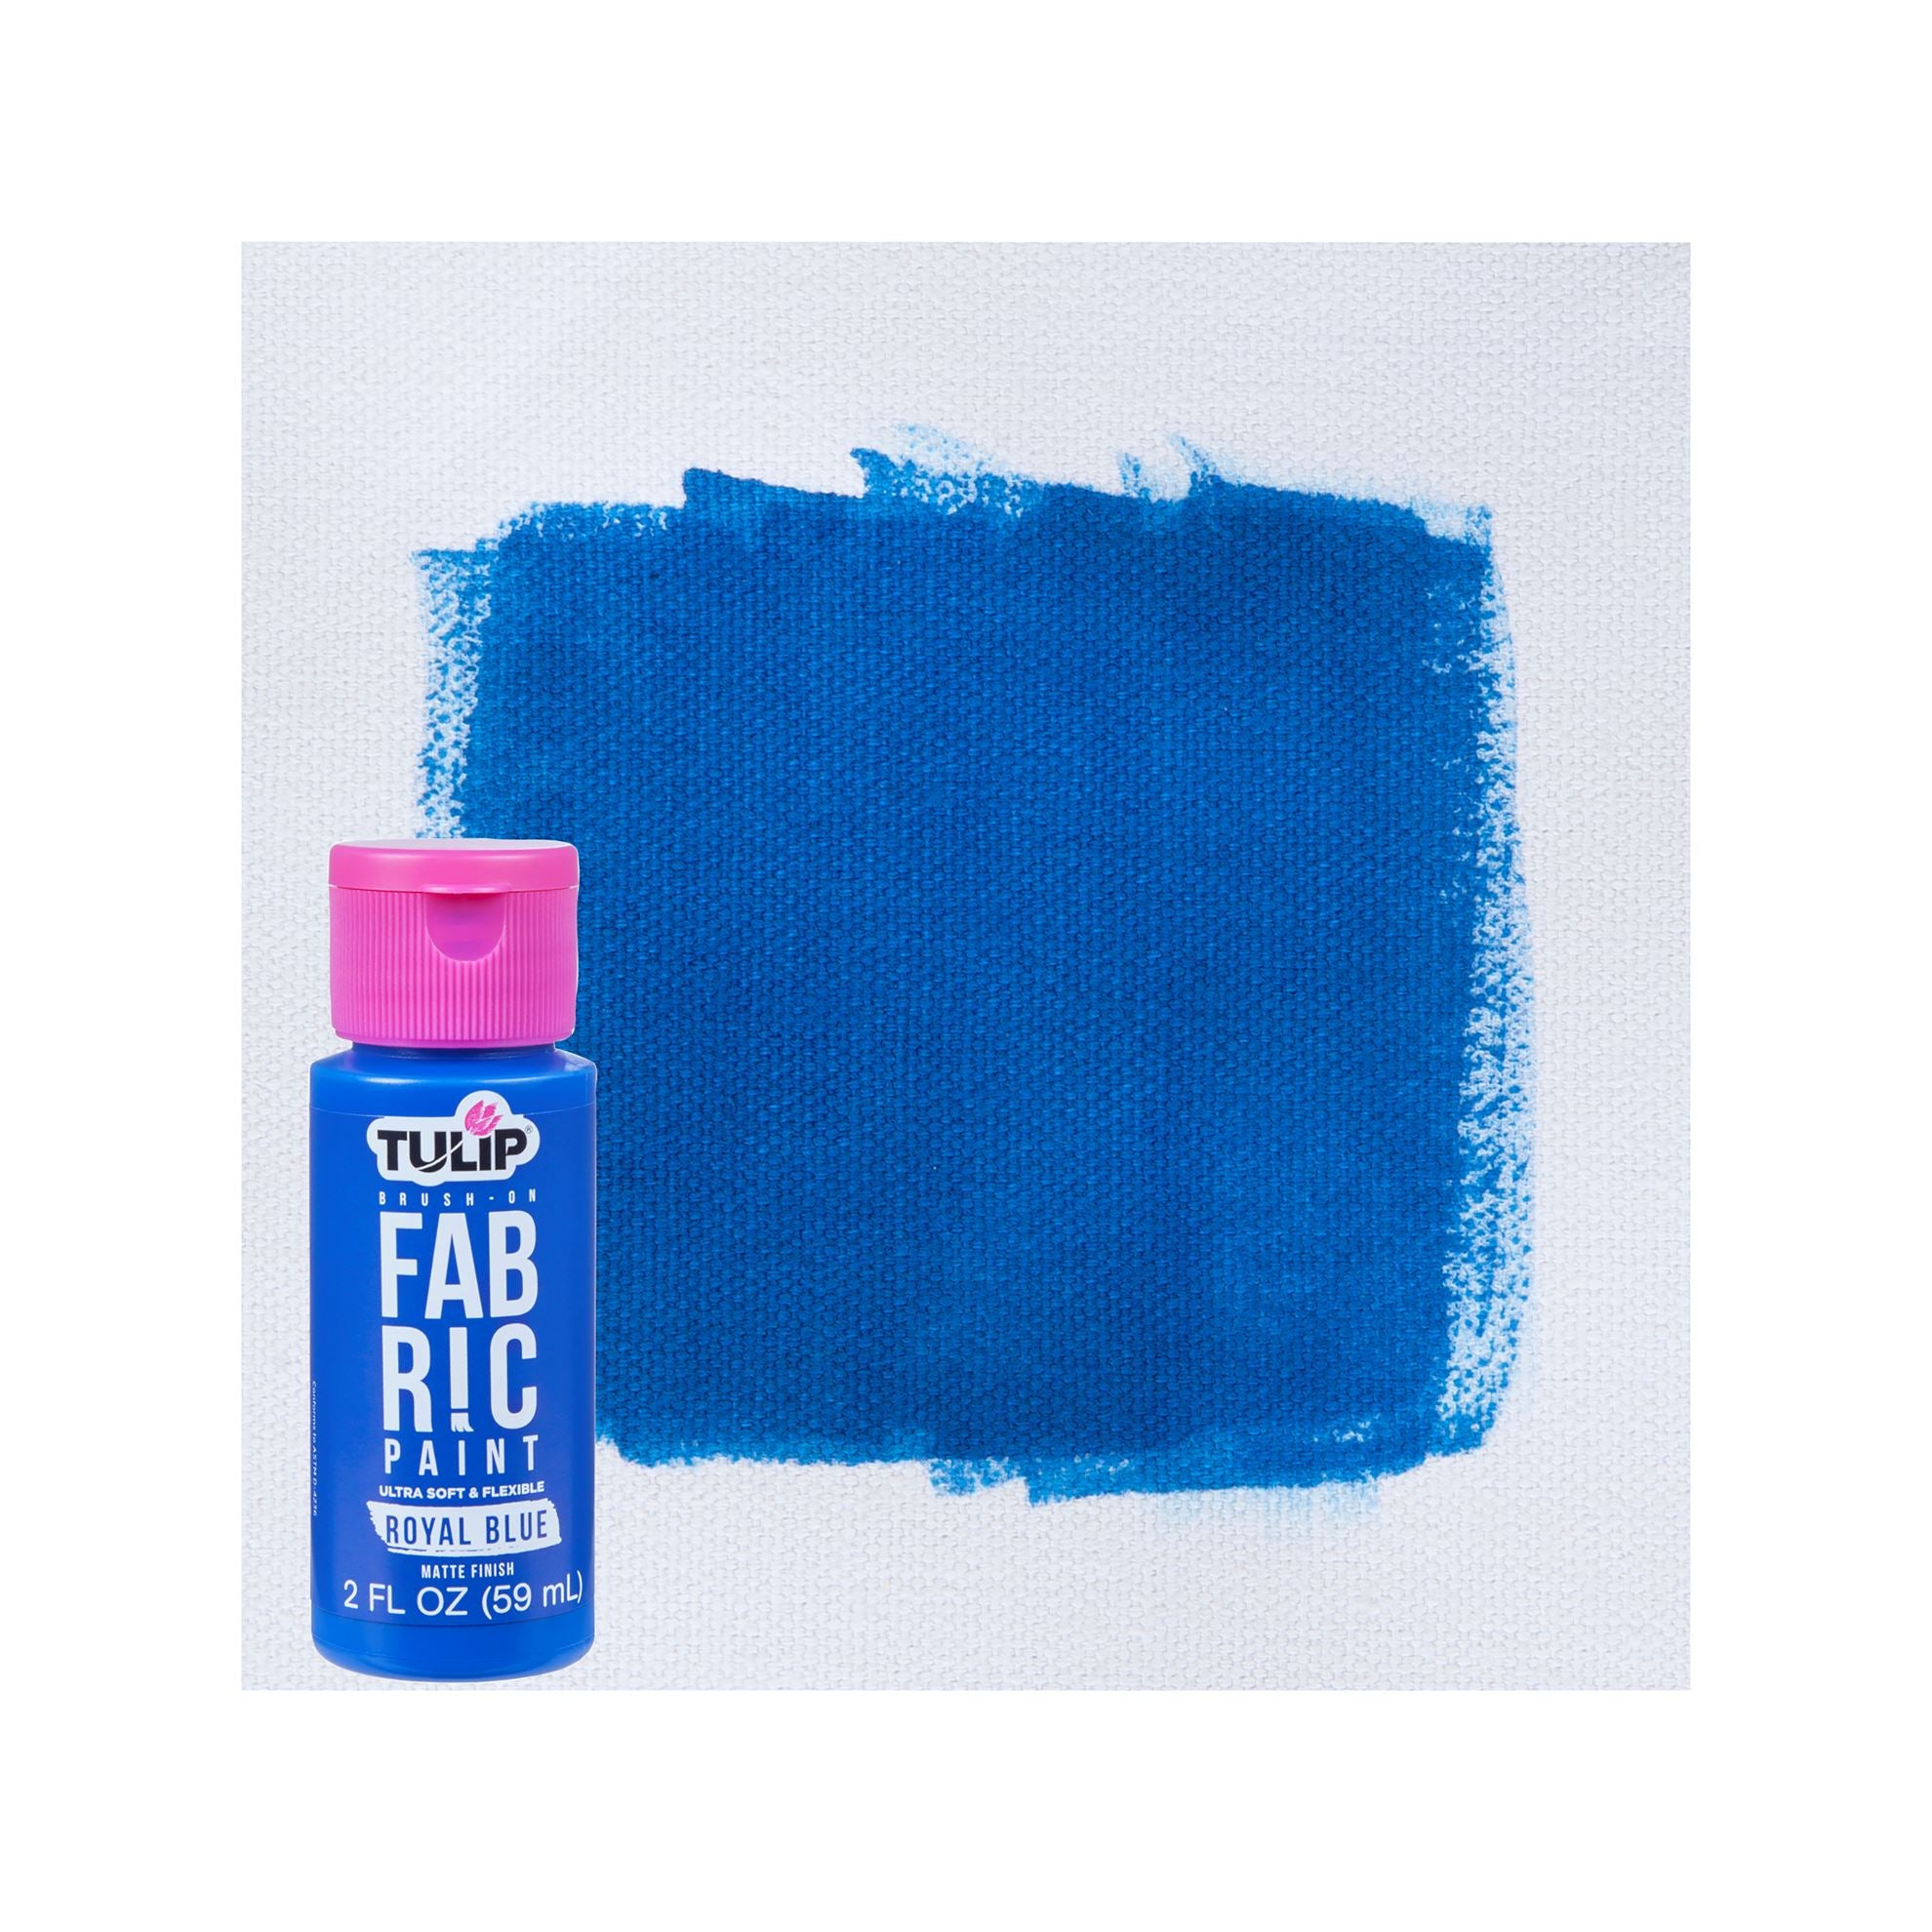 Hello Hobby Brush-On Fabric Paint, Royal Blue, 2.7 Fl. Oz